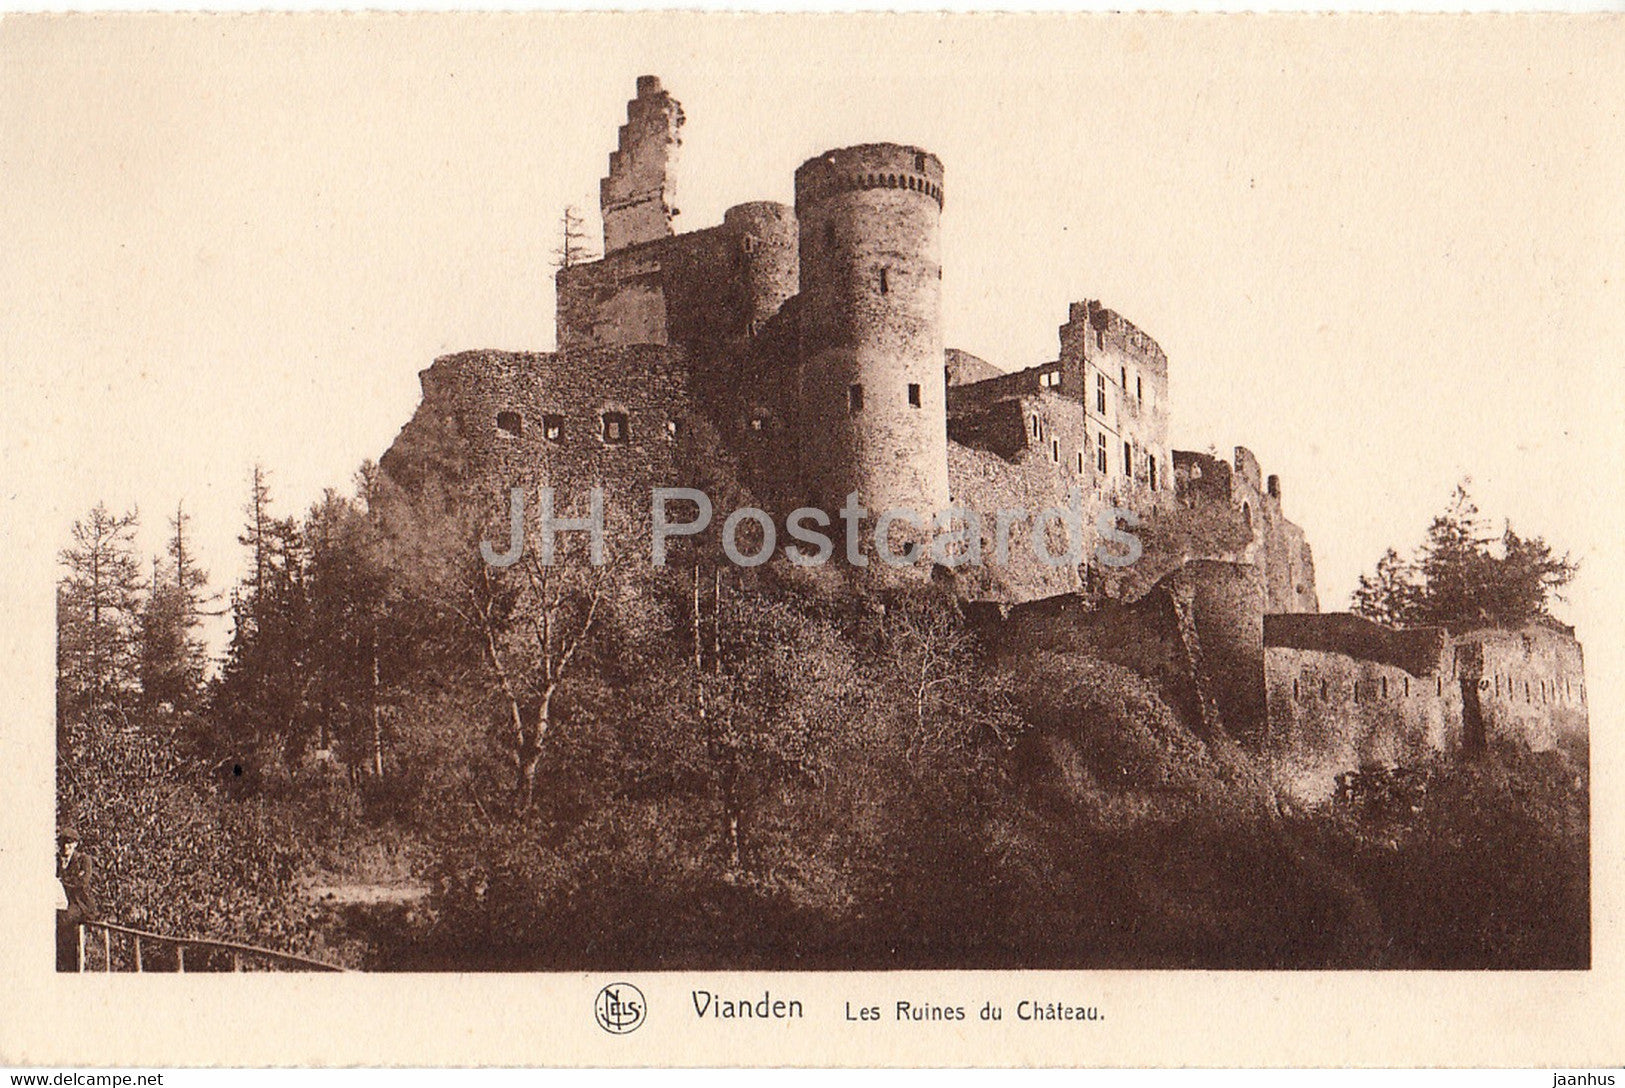 Vianden - Les Ruines du Chateau - castle ruins - 29 - serie 6 - old postcard - Luxembourg - unused - JH Postcards